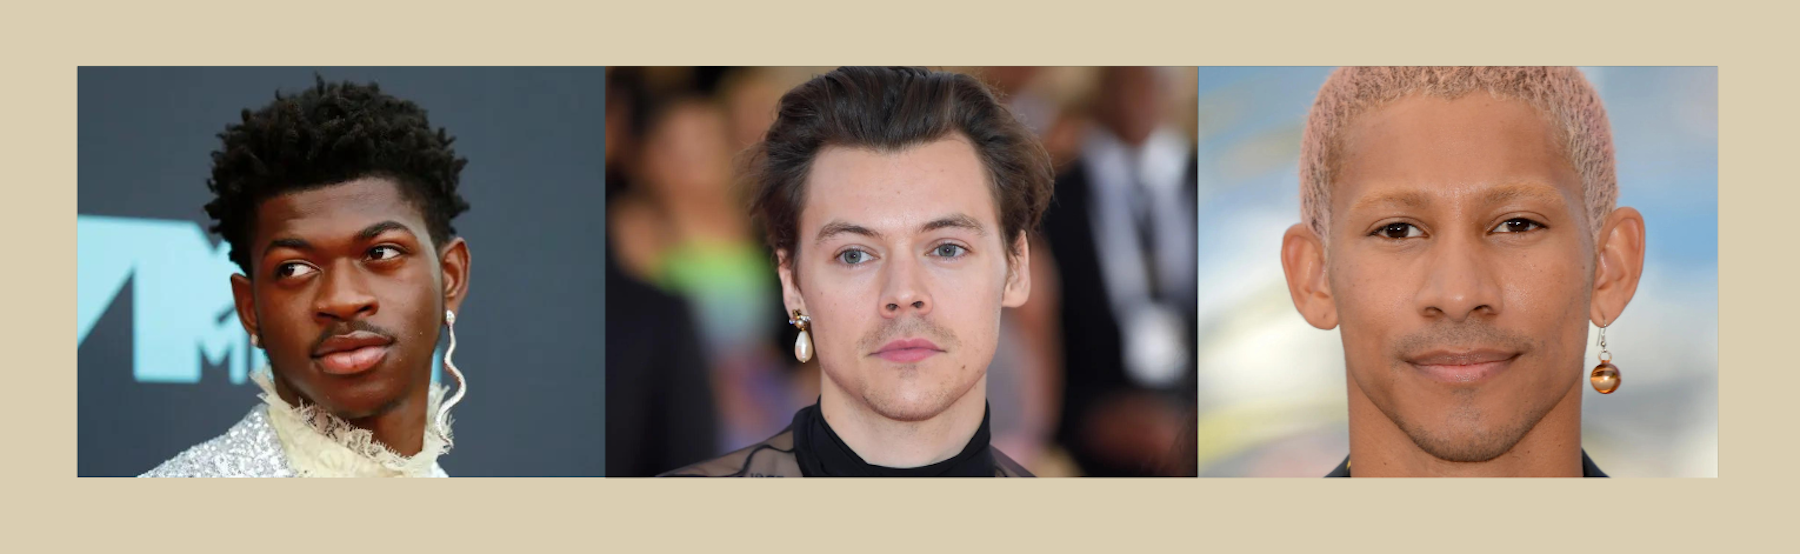 Celebrities wearing unbalanced earring